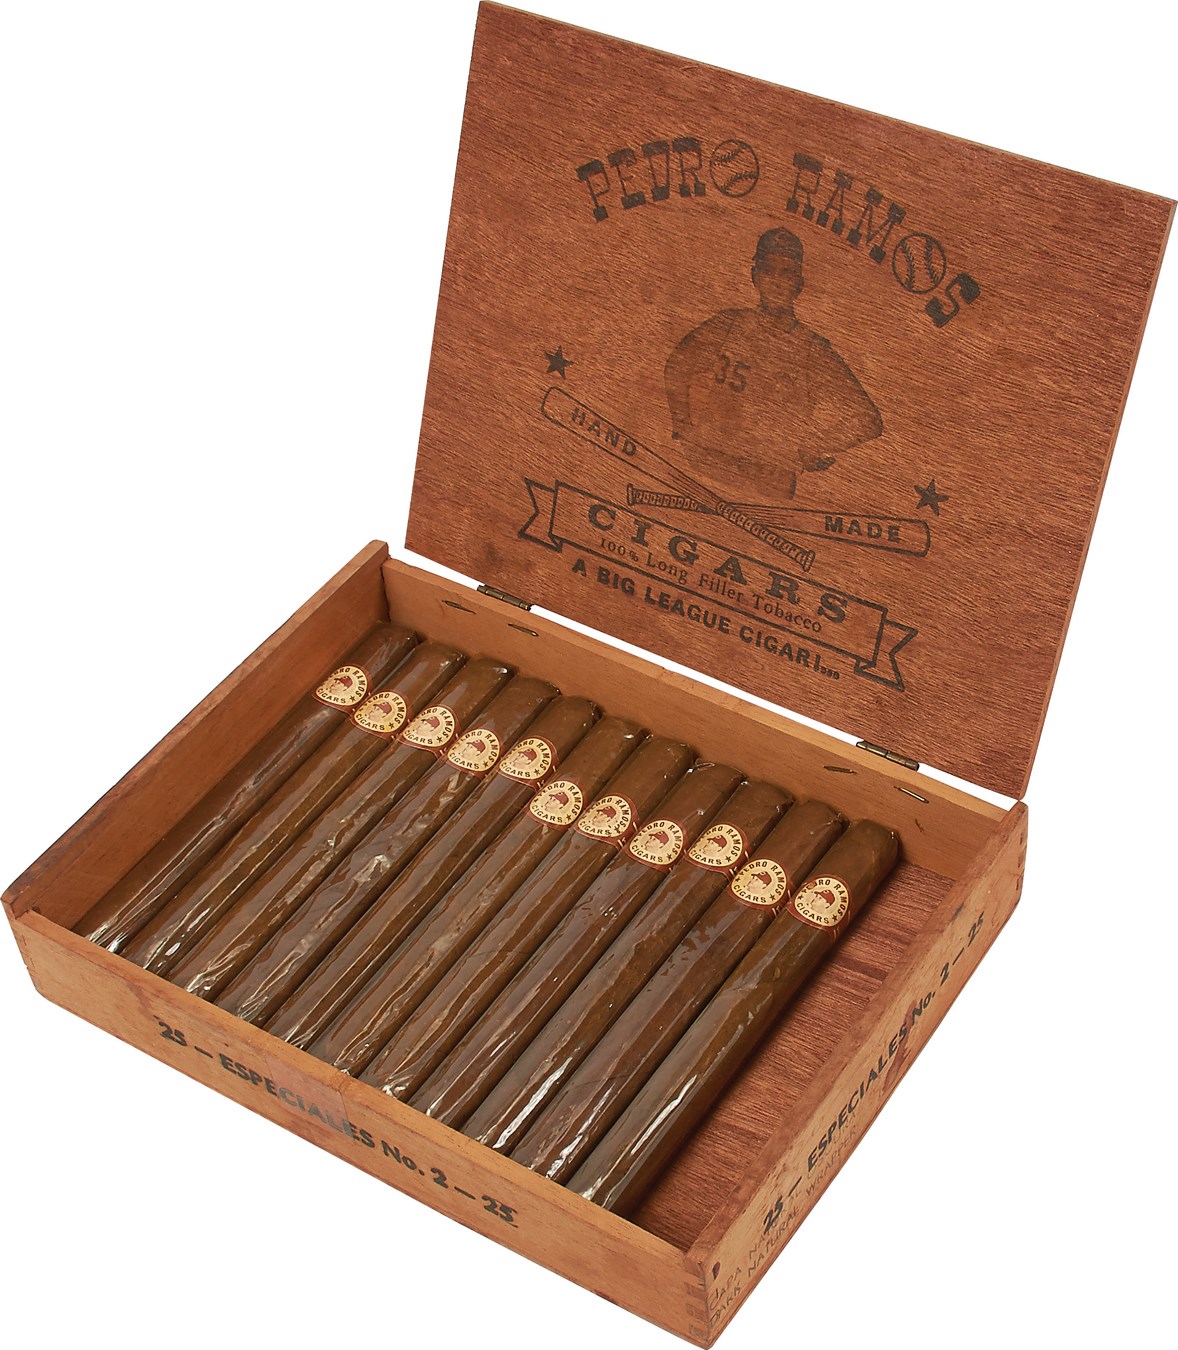 1963 Pedro Ramos Cigar Box with Unopened Cigars w/Bands